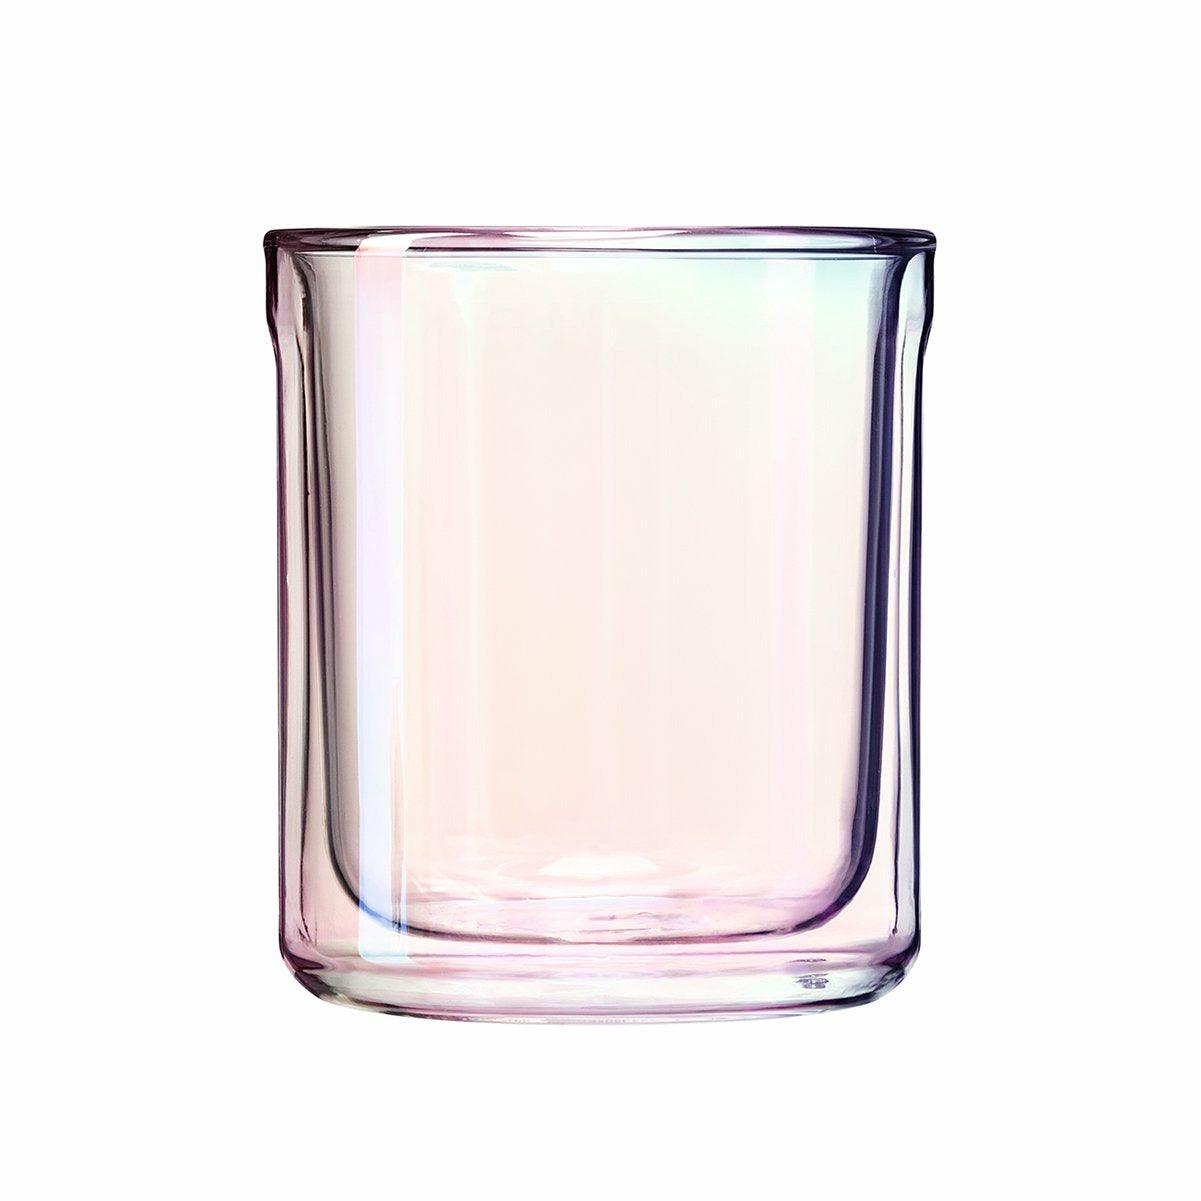 Corkcicle Glass Mug Set of 2 12oz / Prism